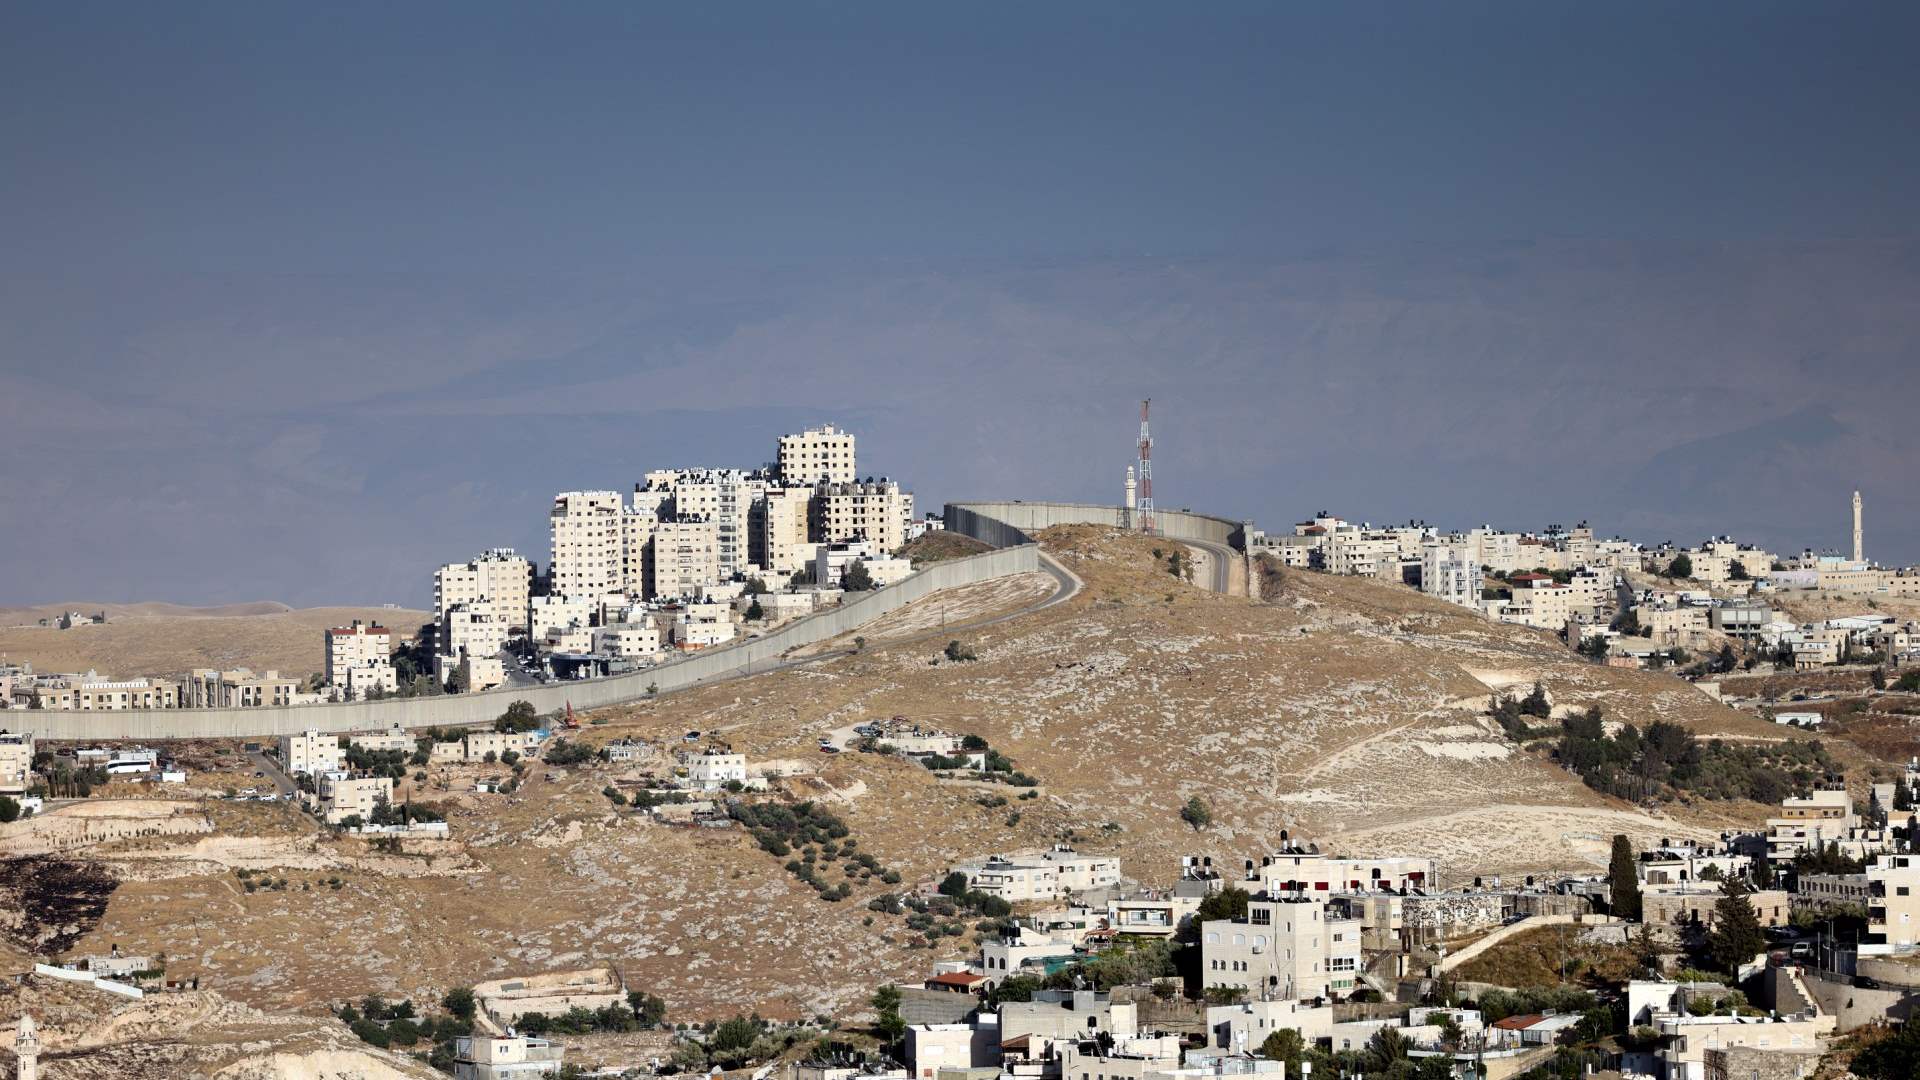 Israel approves construction of 1,700 settlement units in East Jerusalem